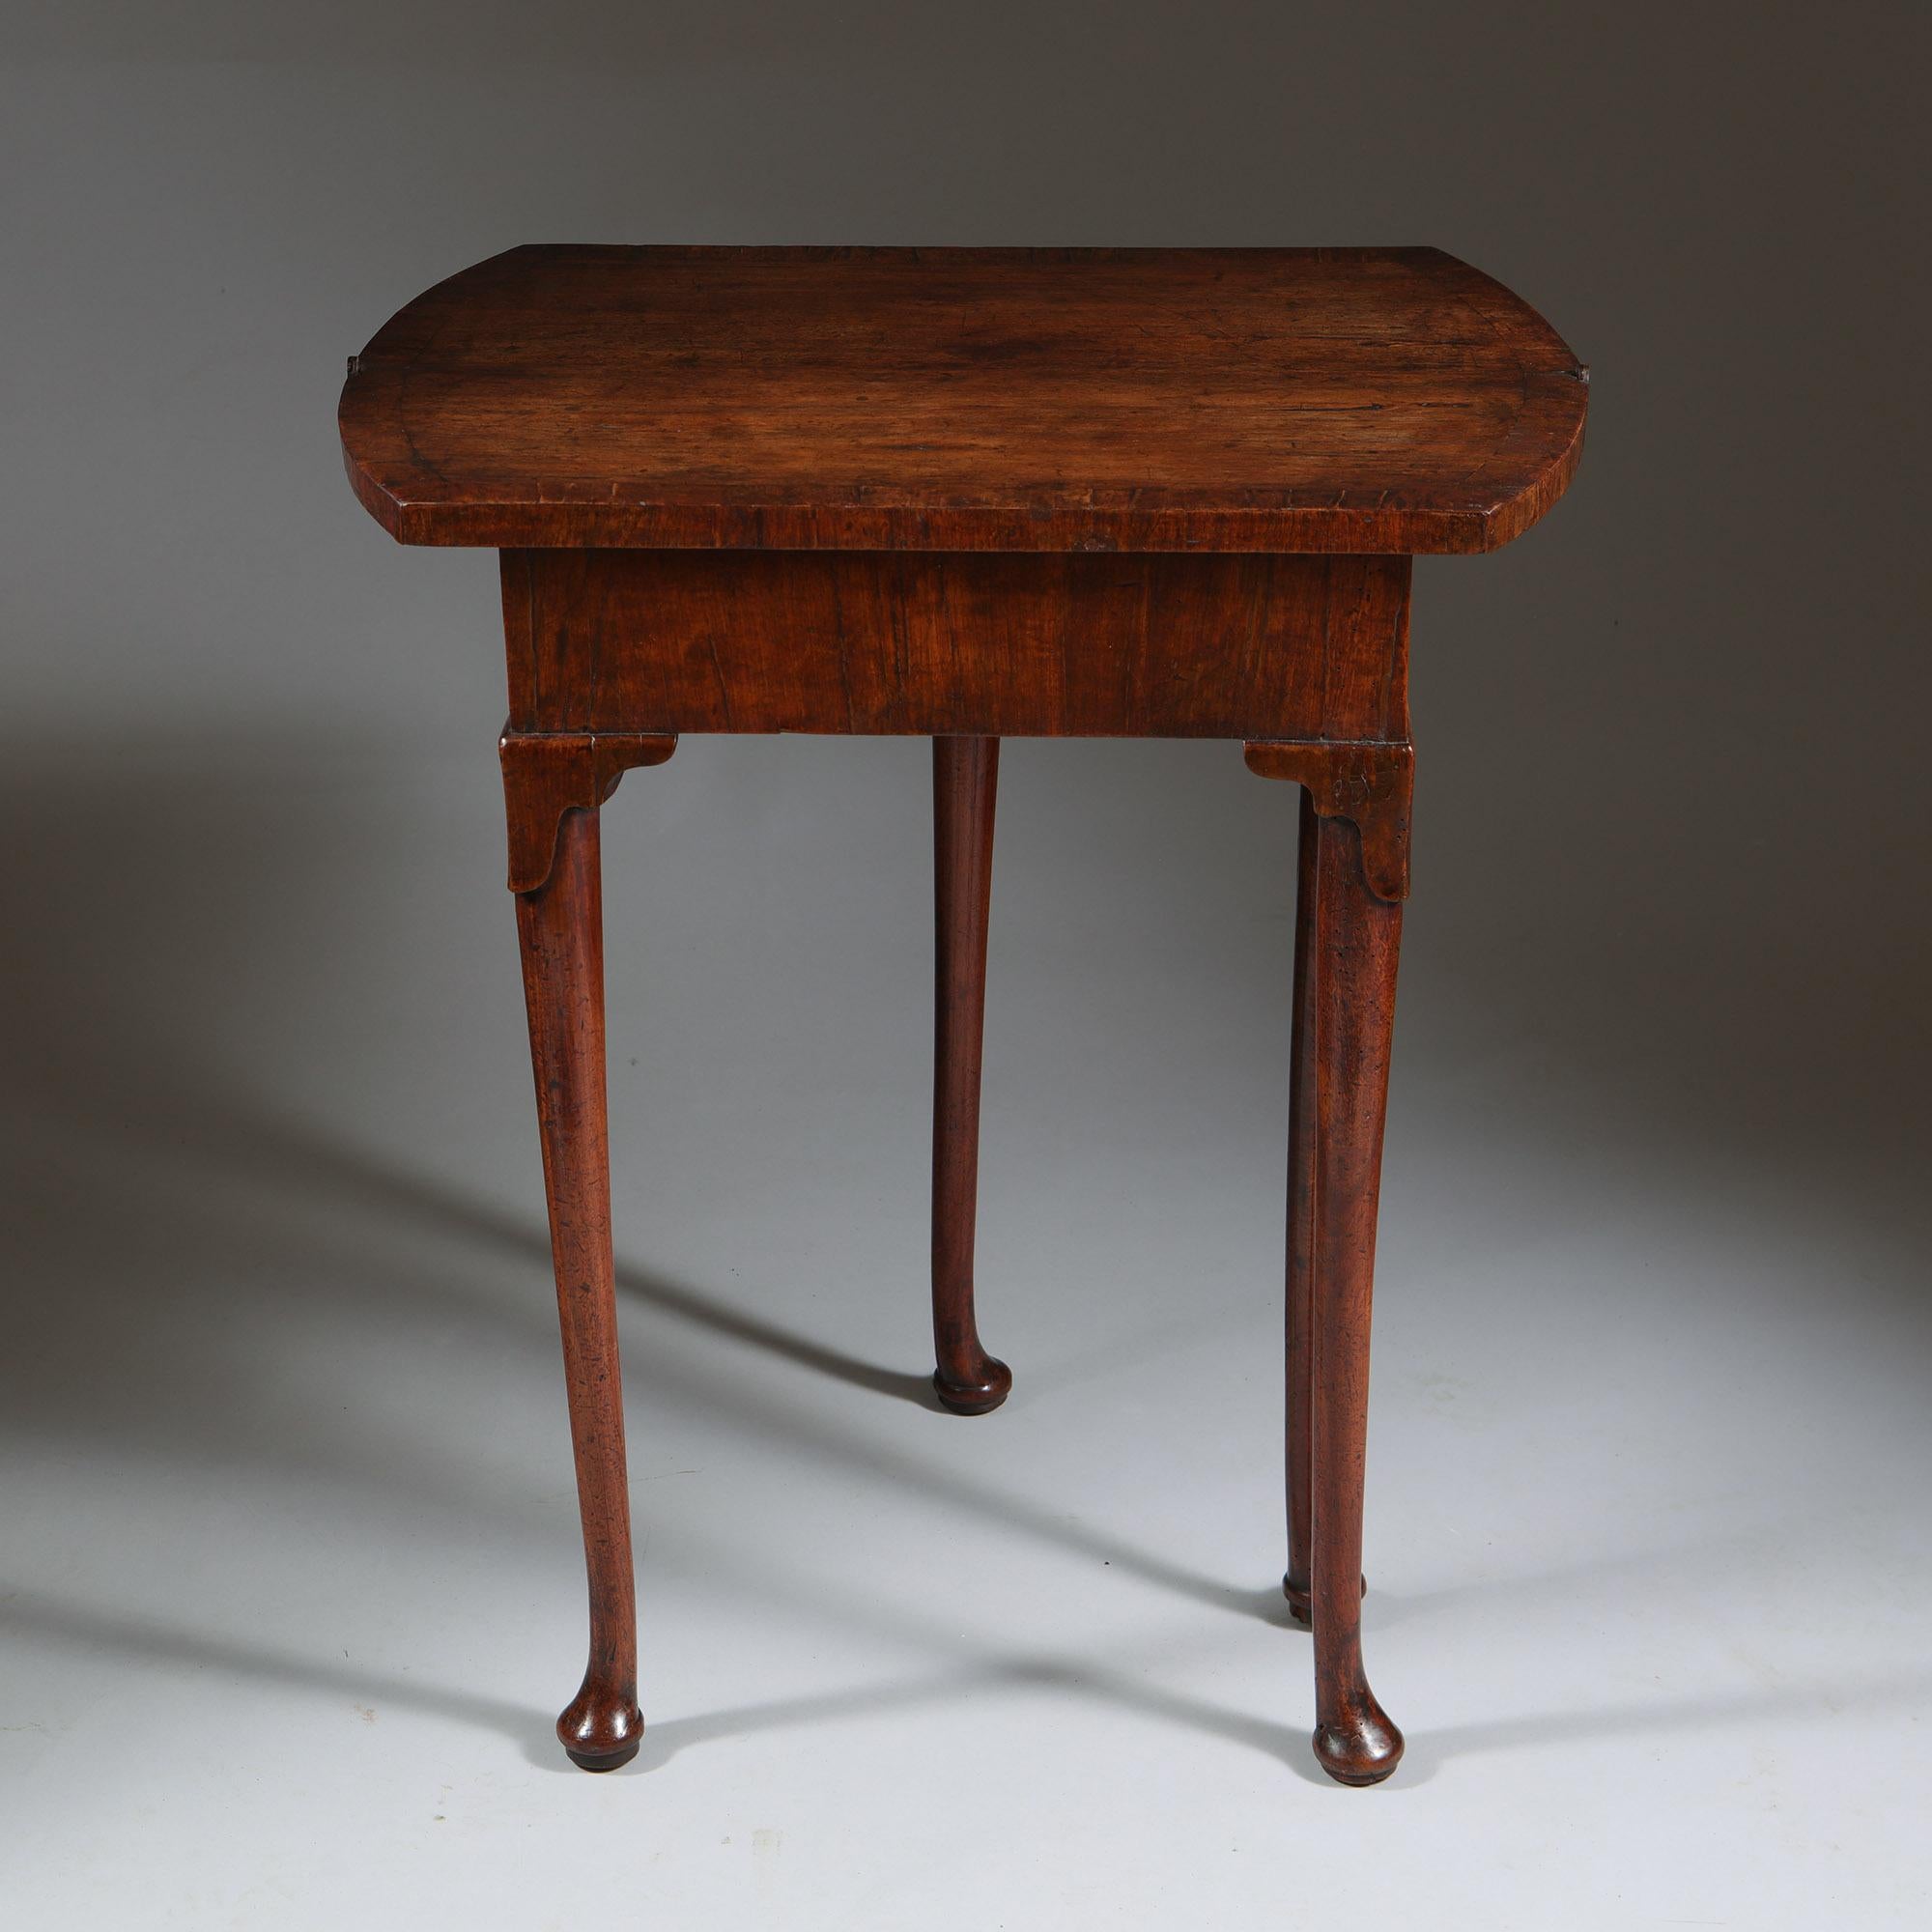 A Unique Early 18th Century Diminutive George I Figured Walnut Bachelors Table 2